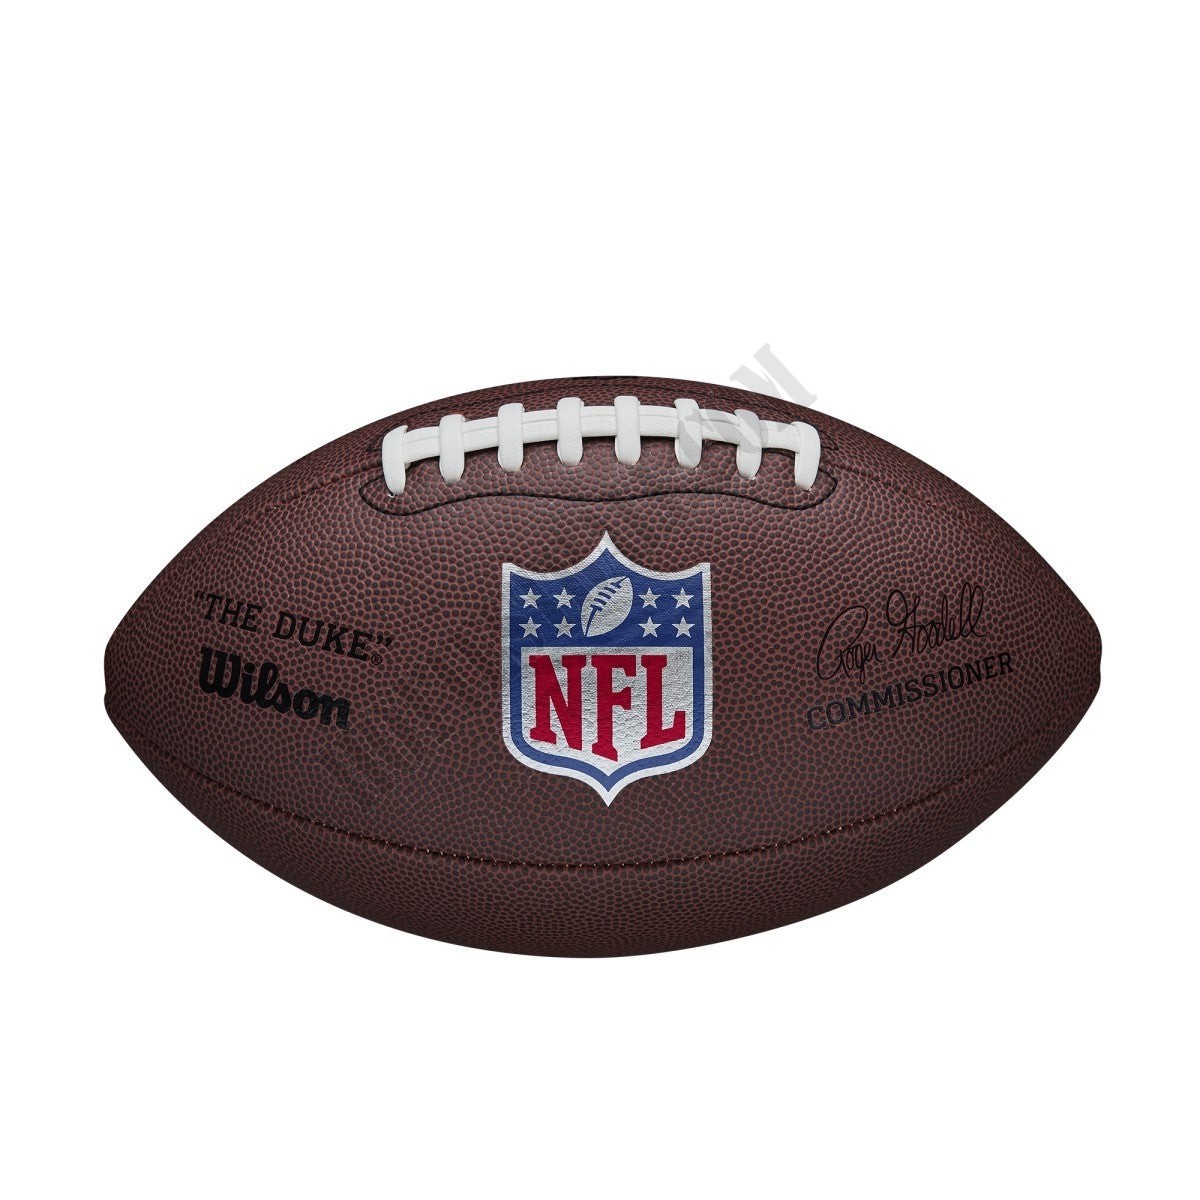 NFL The Duke Replica Football - Wilson Discount Store - NFL The Duke Replica Football - Wilson Discount Store